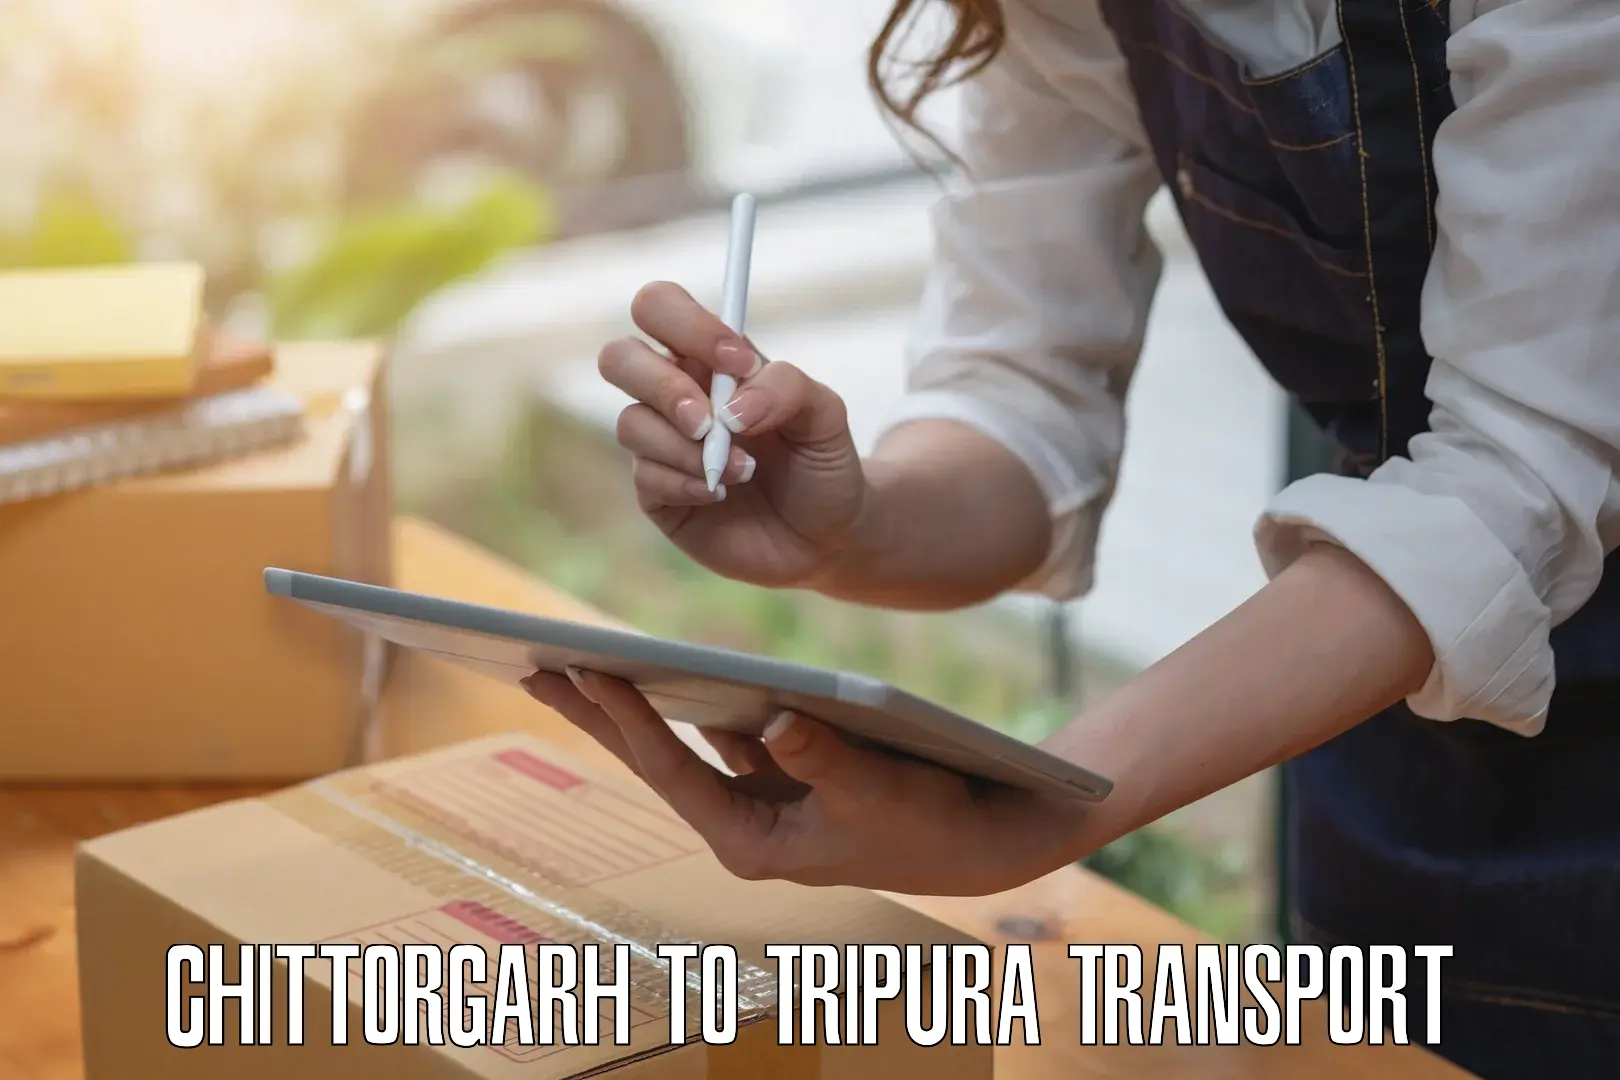 Luggage transport services Chittorgarh to Udaipur Tripura